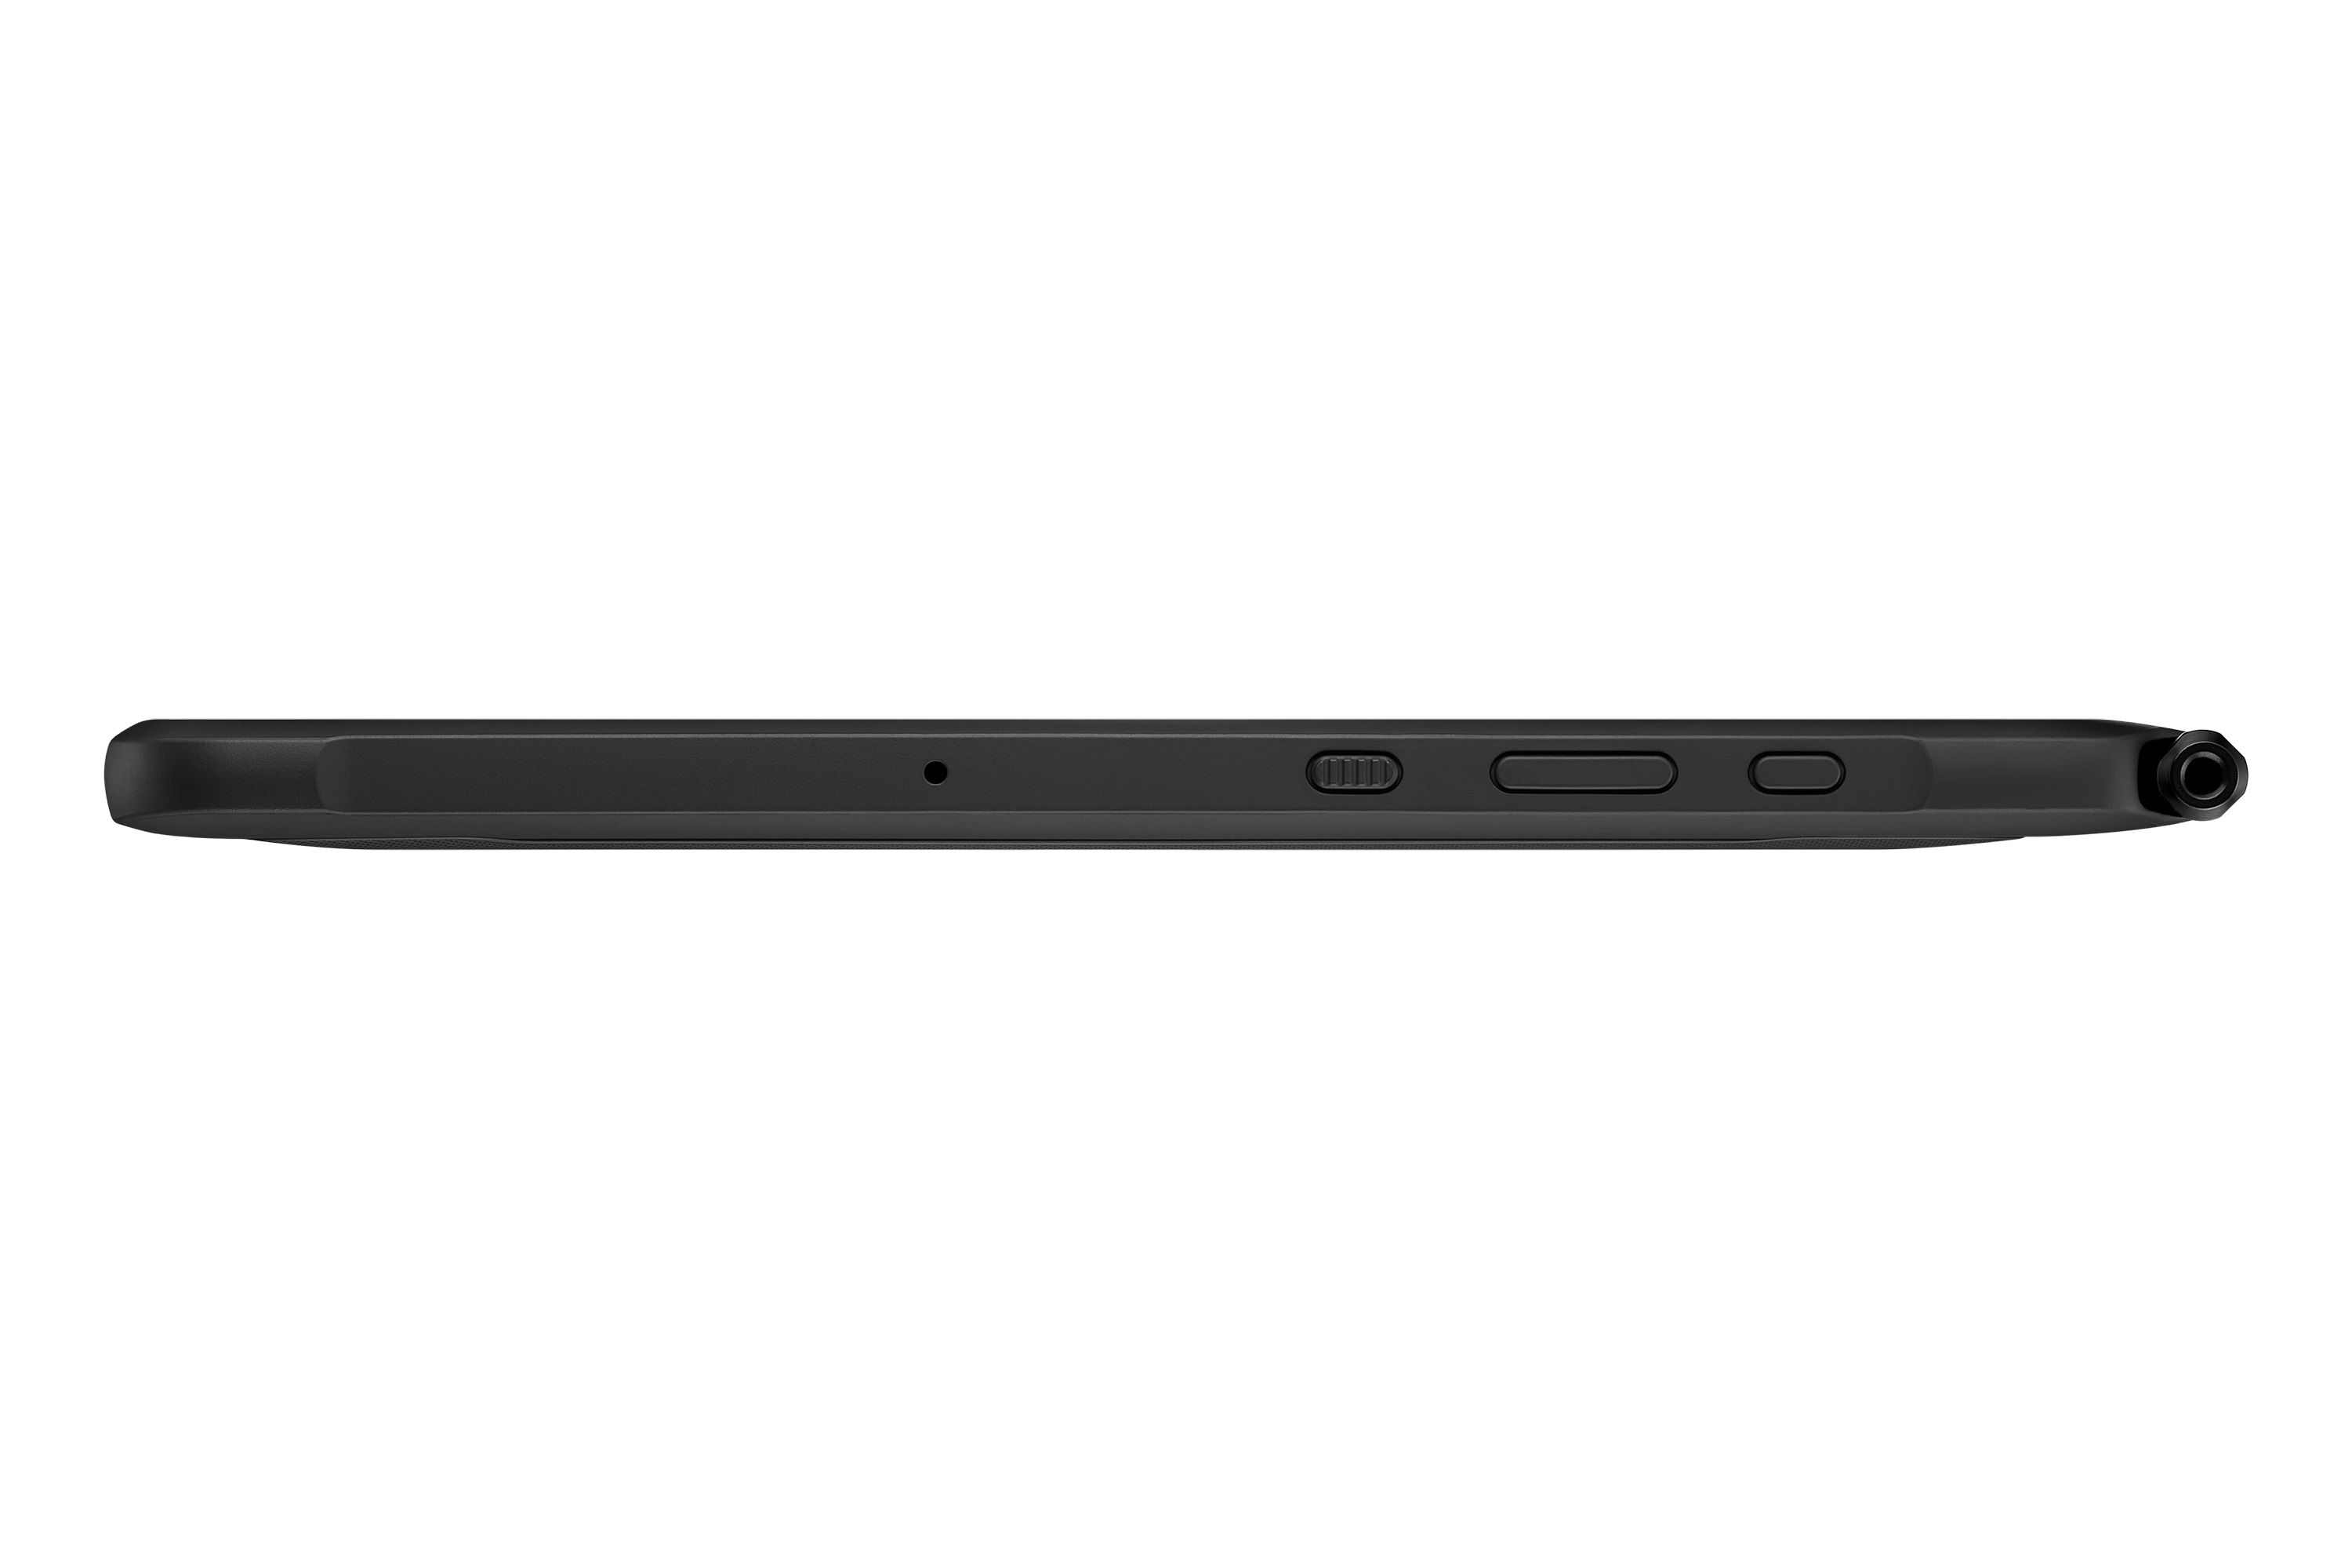 Samsung Galaxy Tab Active Pro 10.1 WiFi - T540, black